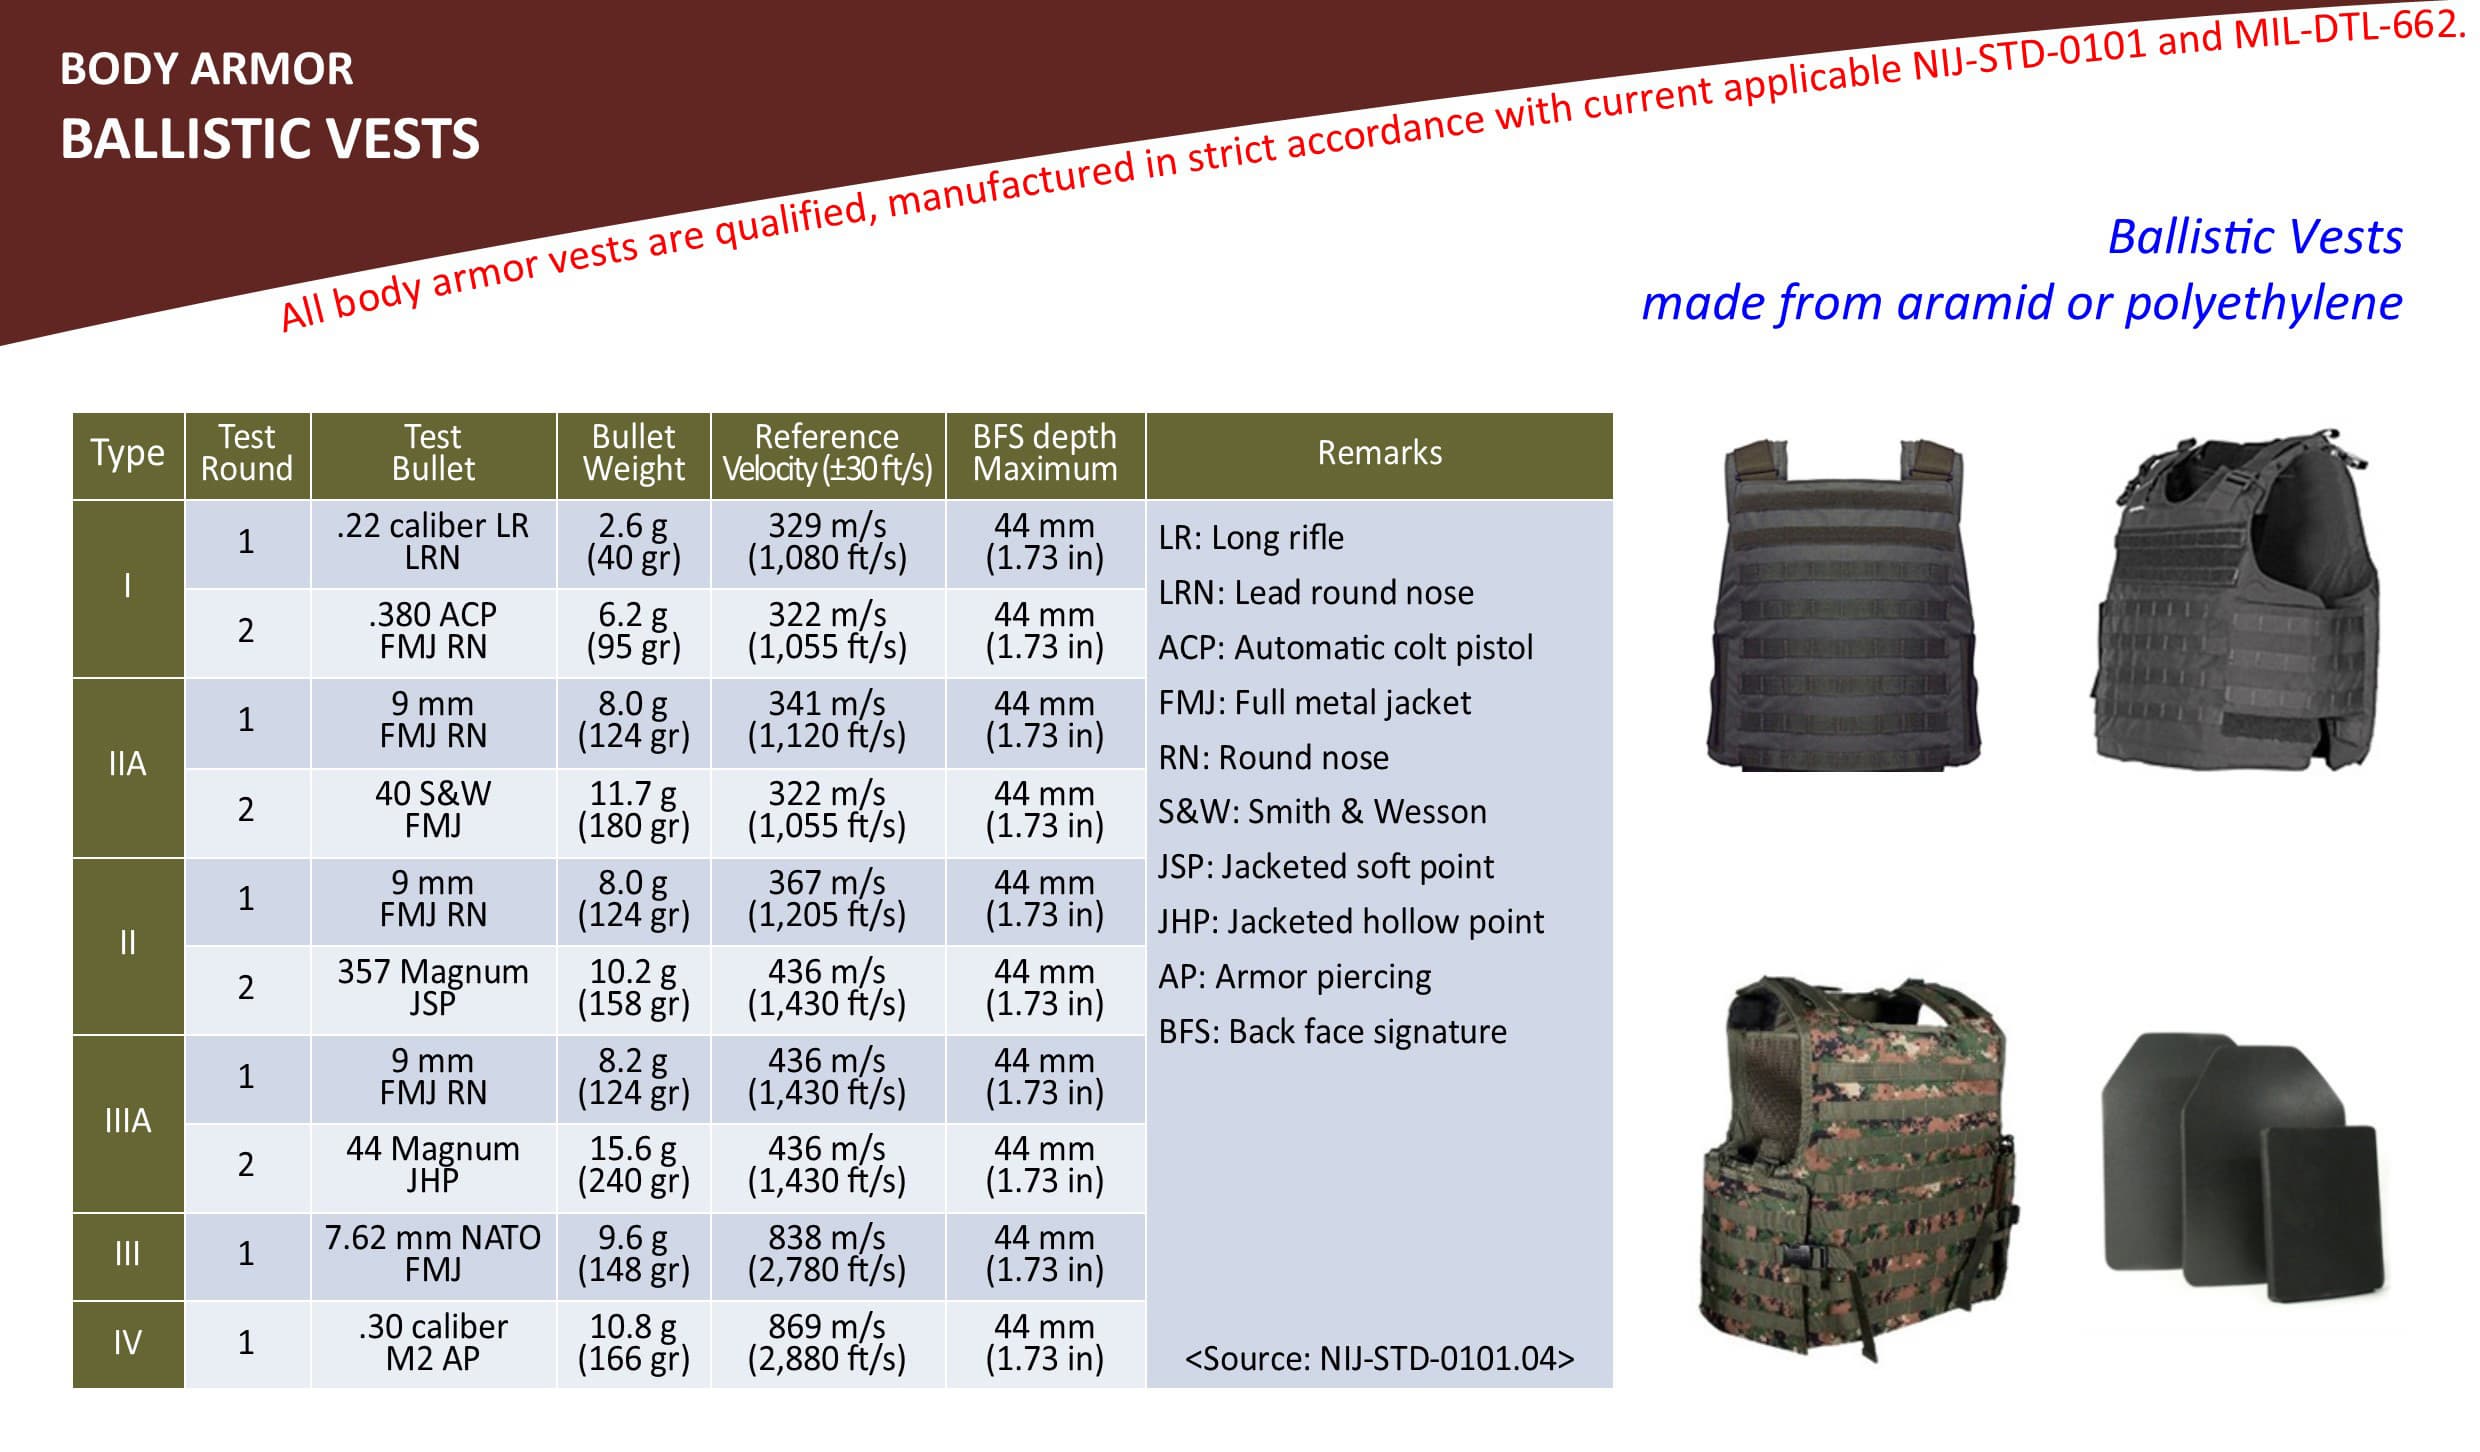 Ballistic vests_ made from aramid or polyethylene